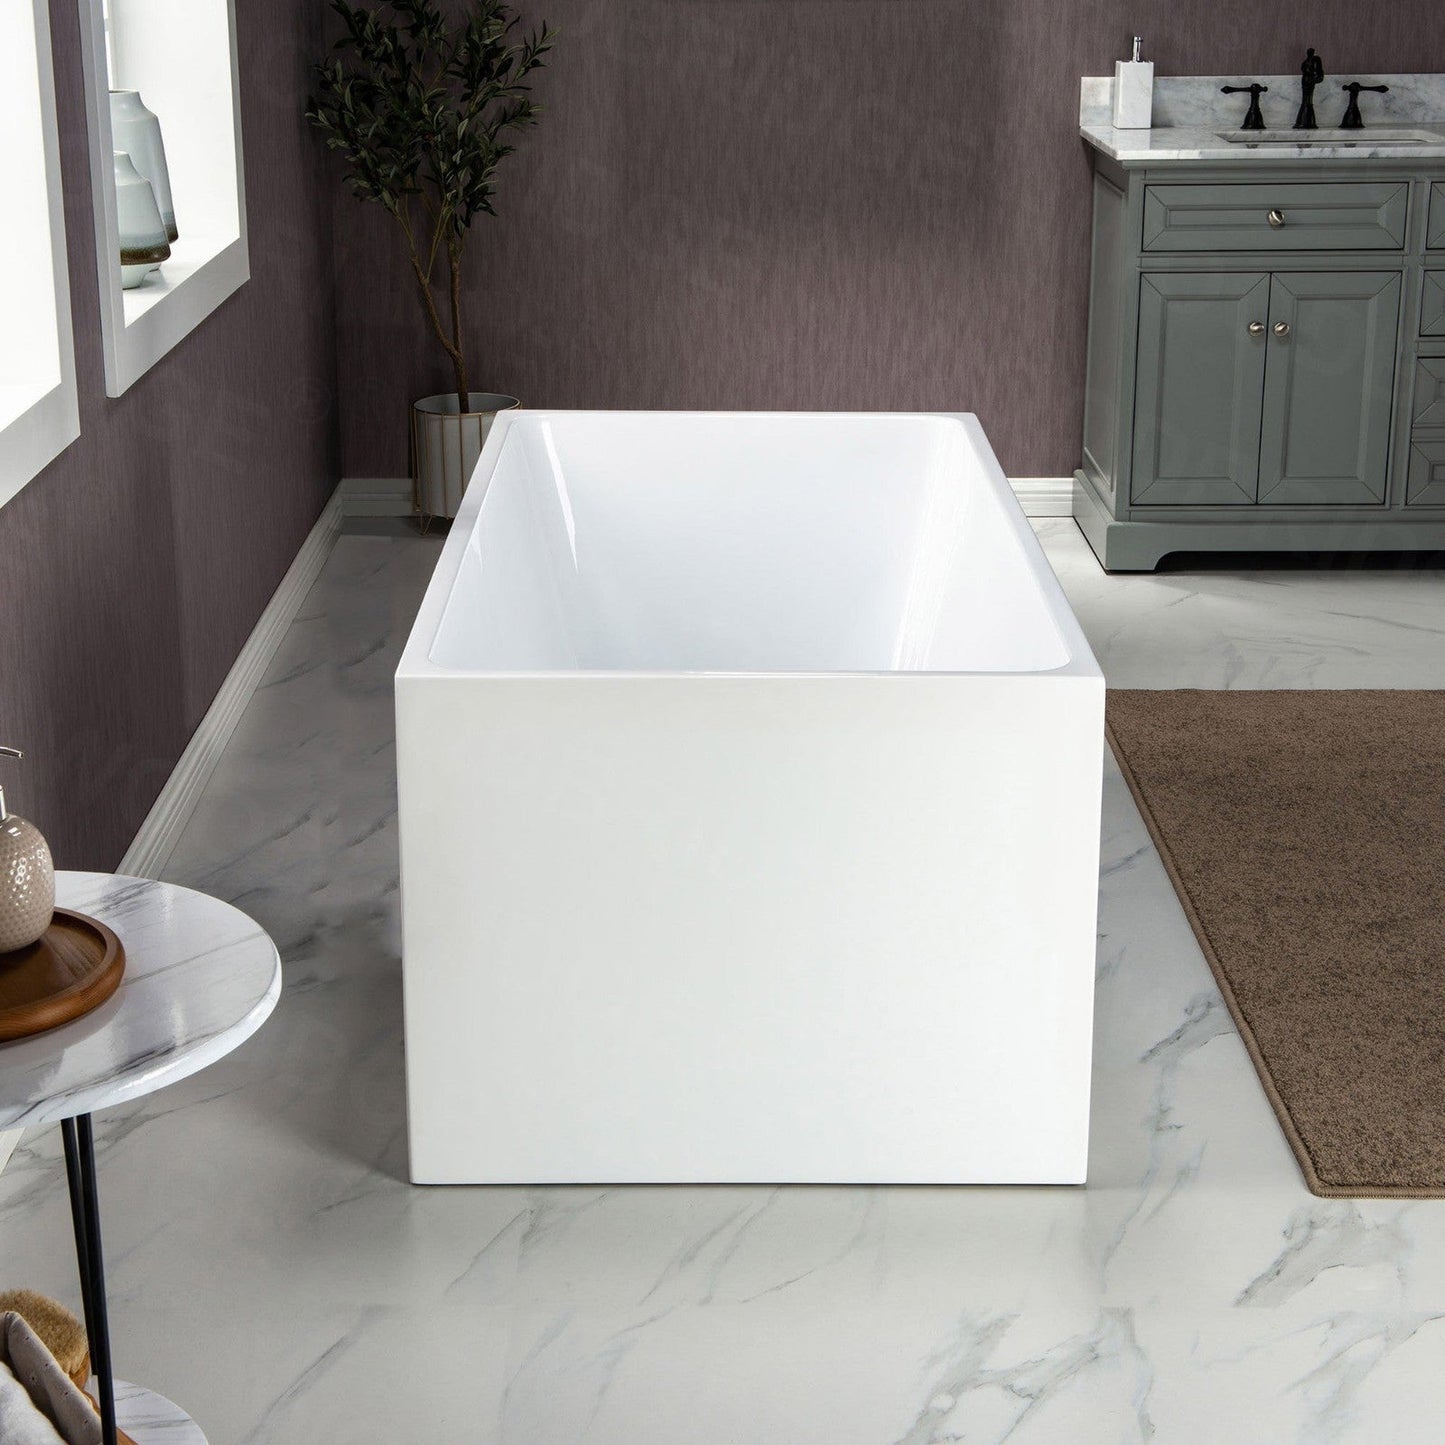 WoodBridge B-0086 67" White Acrylic Freestanding Soaking Bathtub With Matte Black Drain, Overflow, F0072MBVT Tub Filler and Caddy Tray